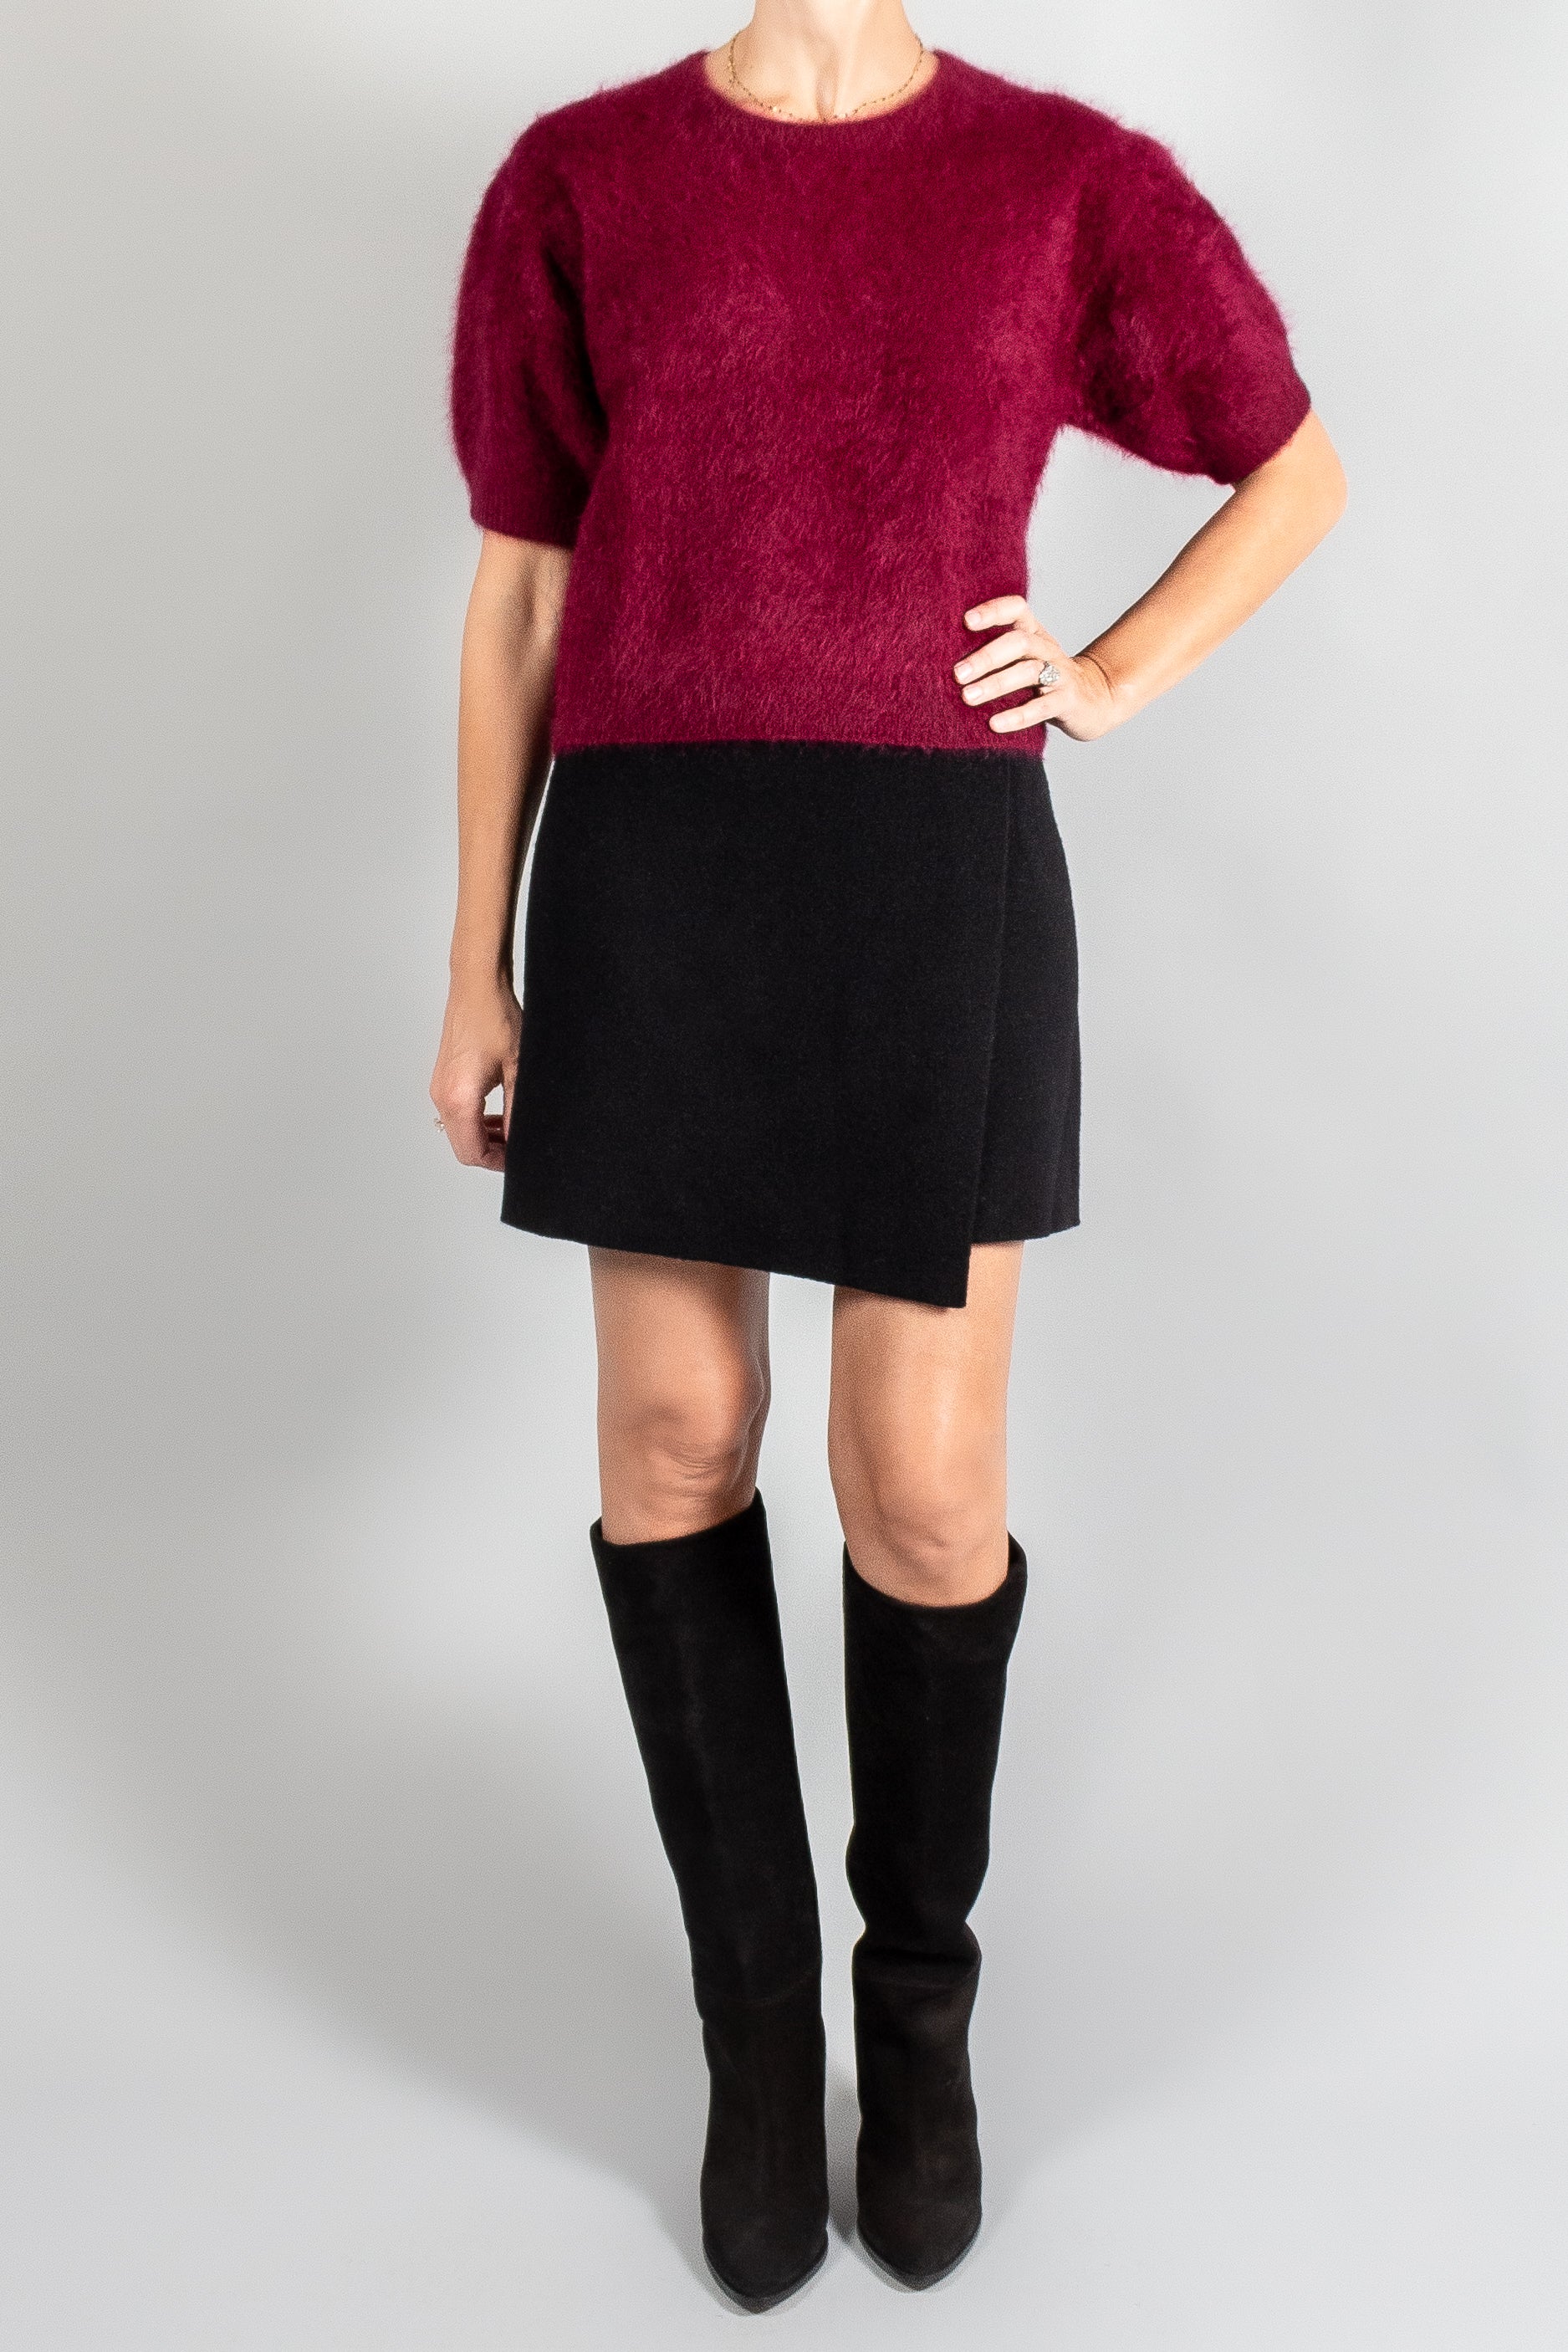 Lisa Yang Josette Skirt-Skirts-Misch-Vancouver-Canada